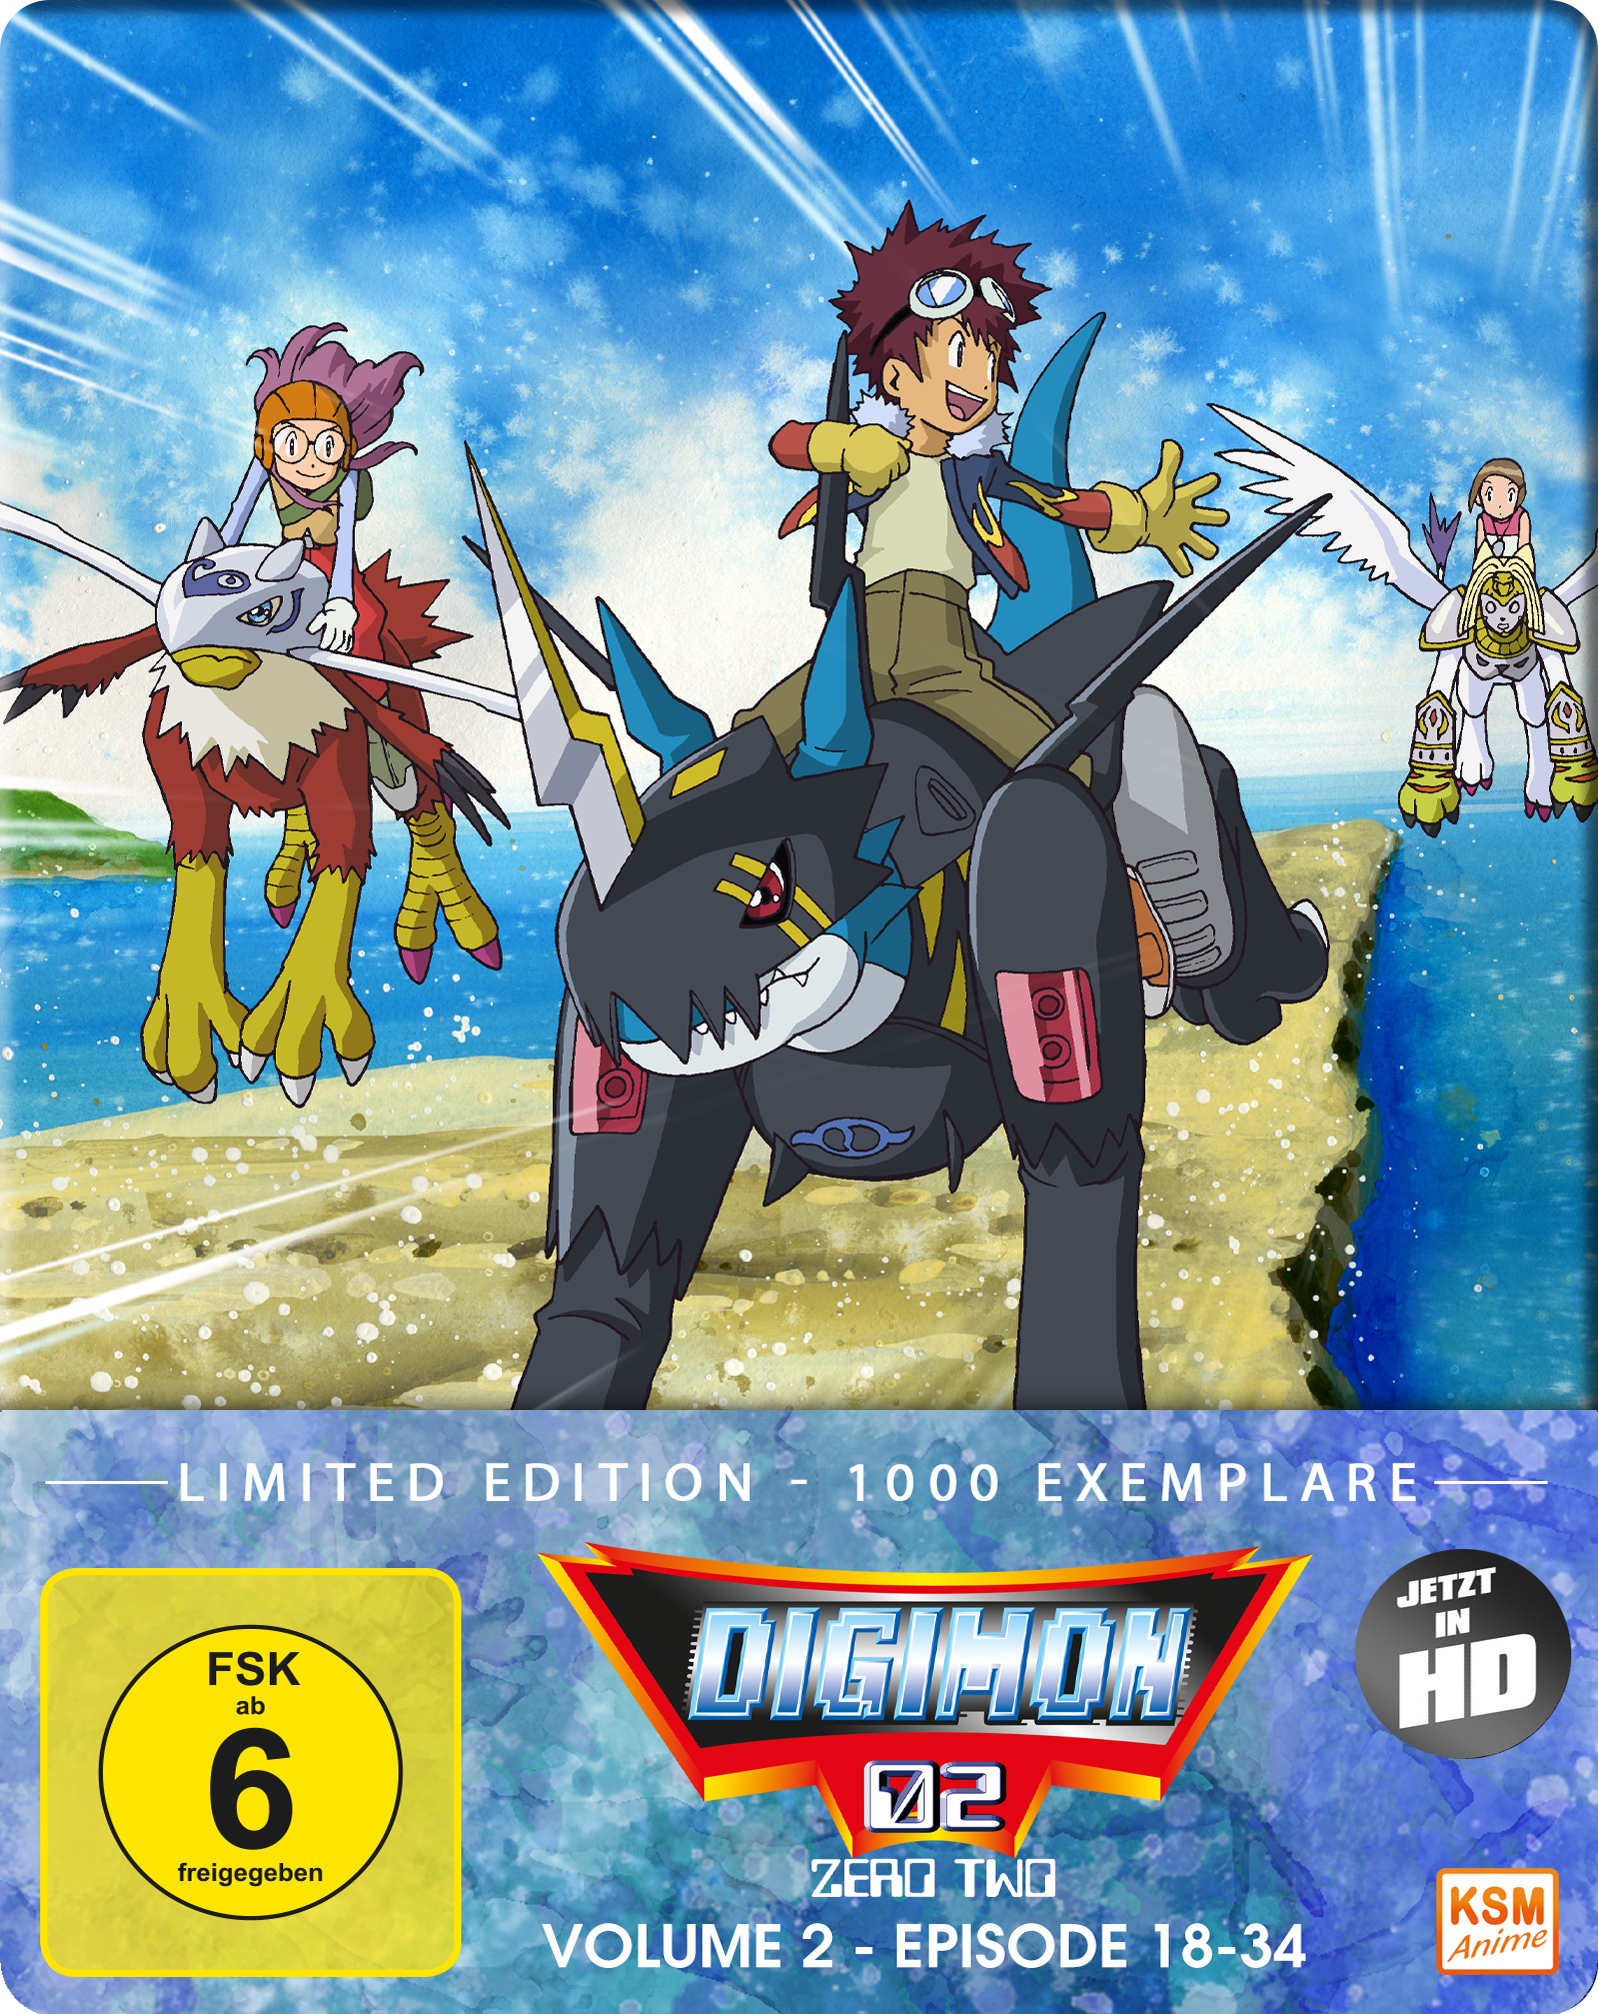 Digimon Adventure 02 - Volume 2 - Limited Edition: Episode 18-34 im FuturePak [Blu-ray]